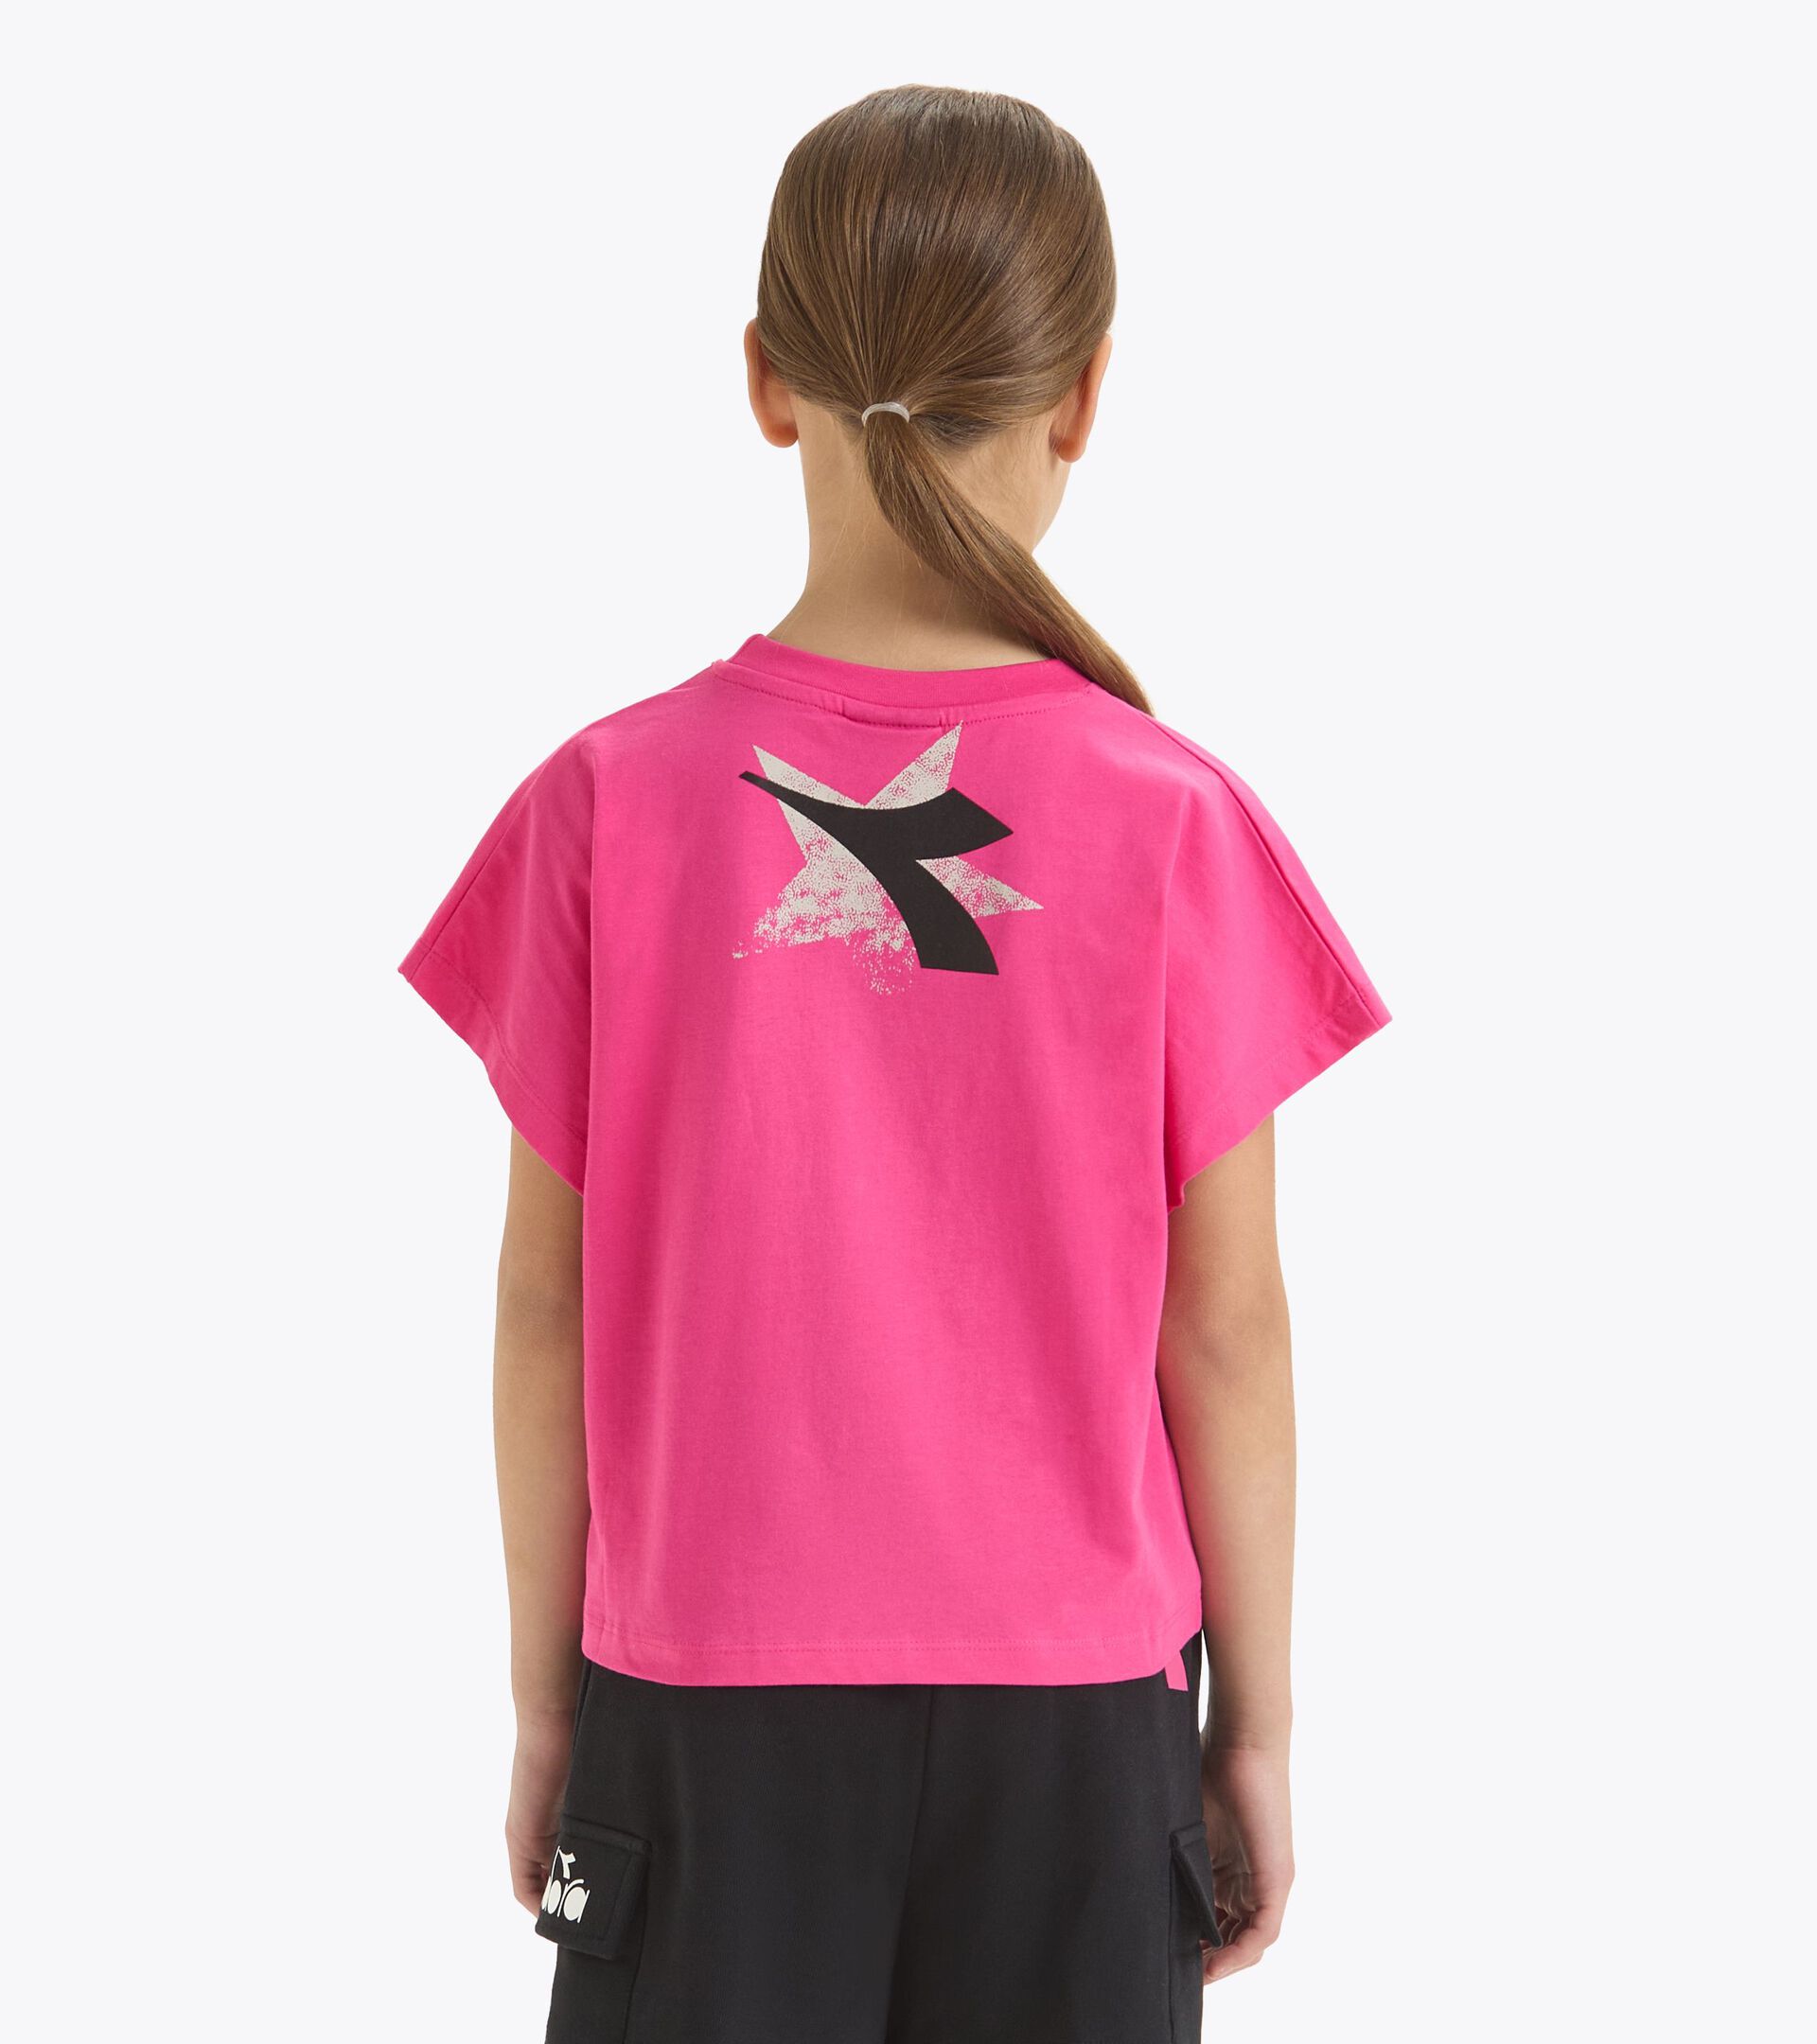 T-shirt cropped - Coupe boxy - Fille JG. T-SHIRT STARS FUCHSIA ROSE - Diadora